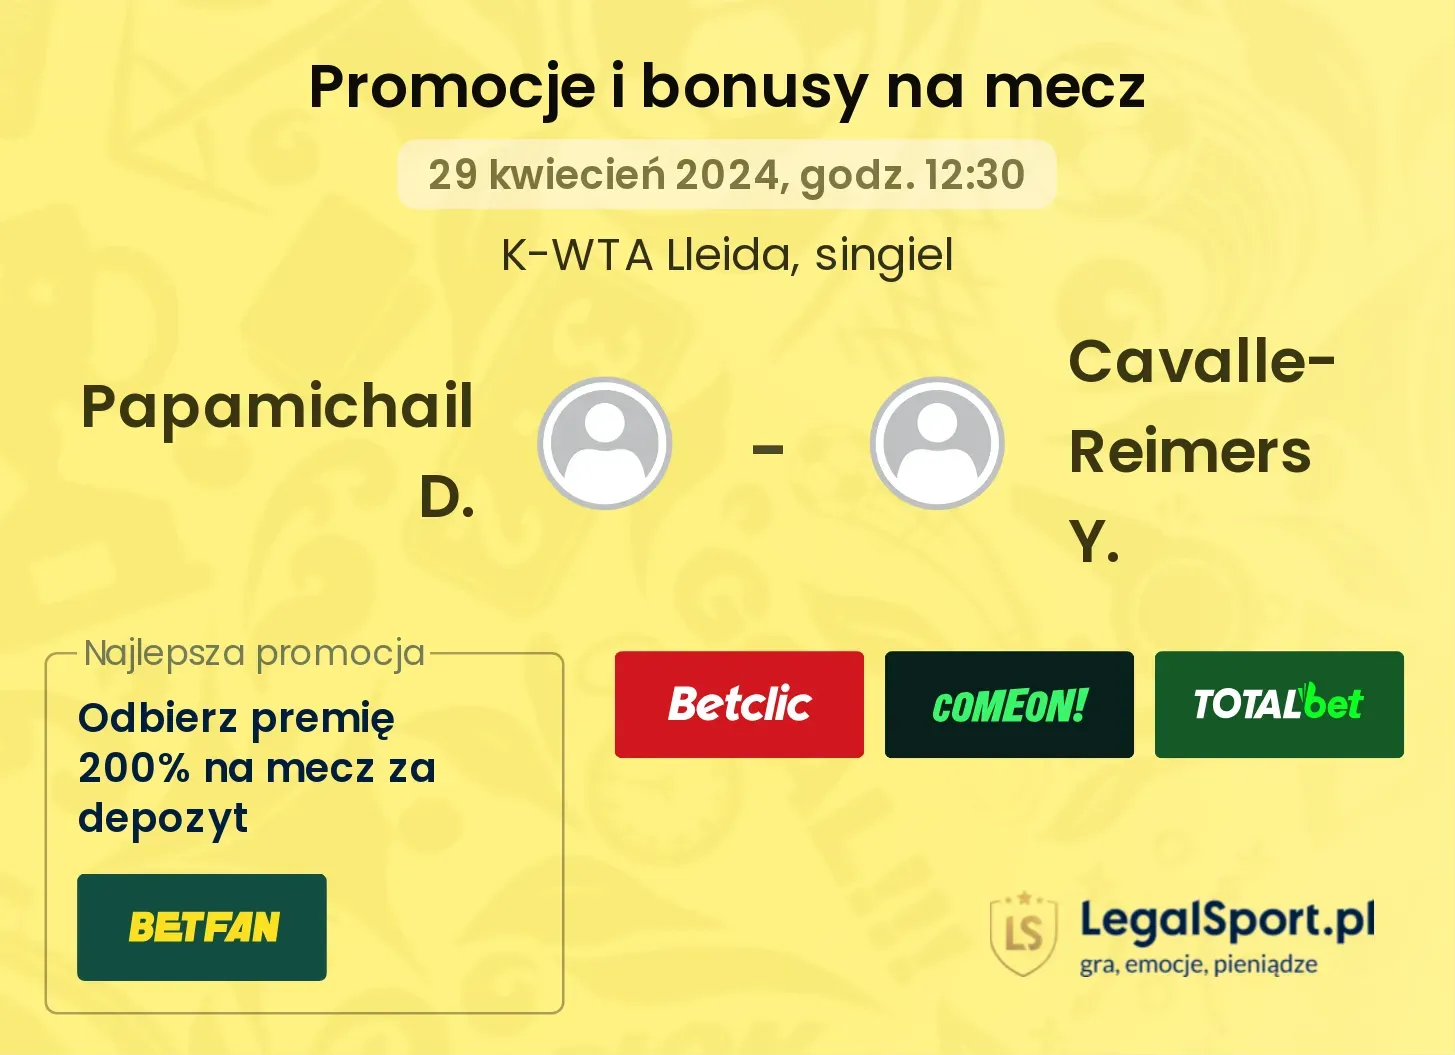 Papamichail D. - Cavalle-Reimers Y. promocje bonusy na mecz